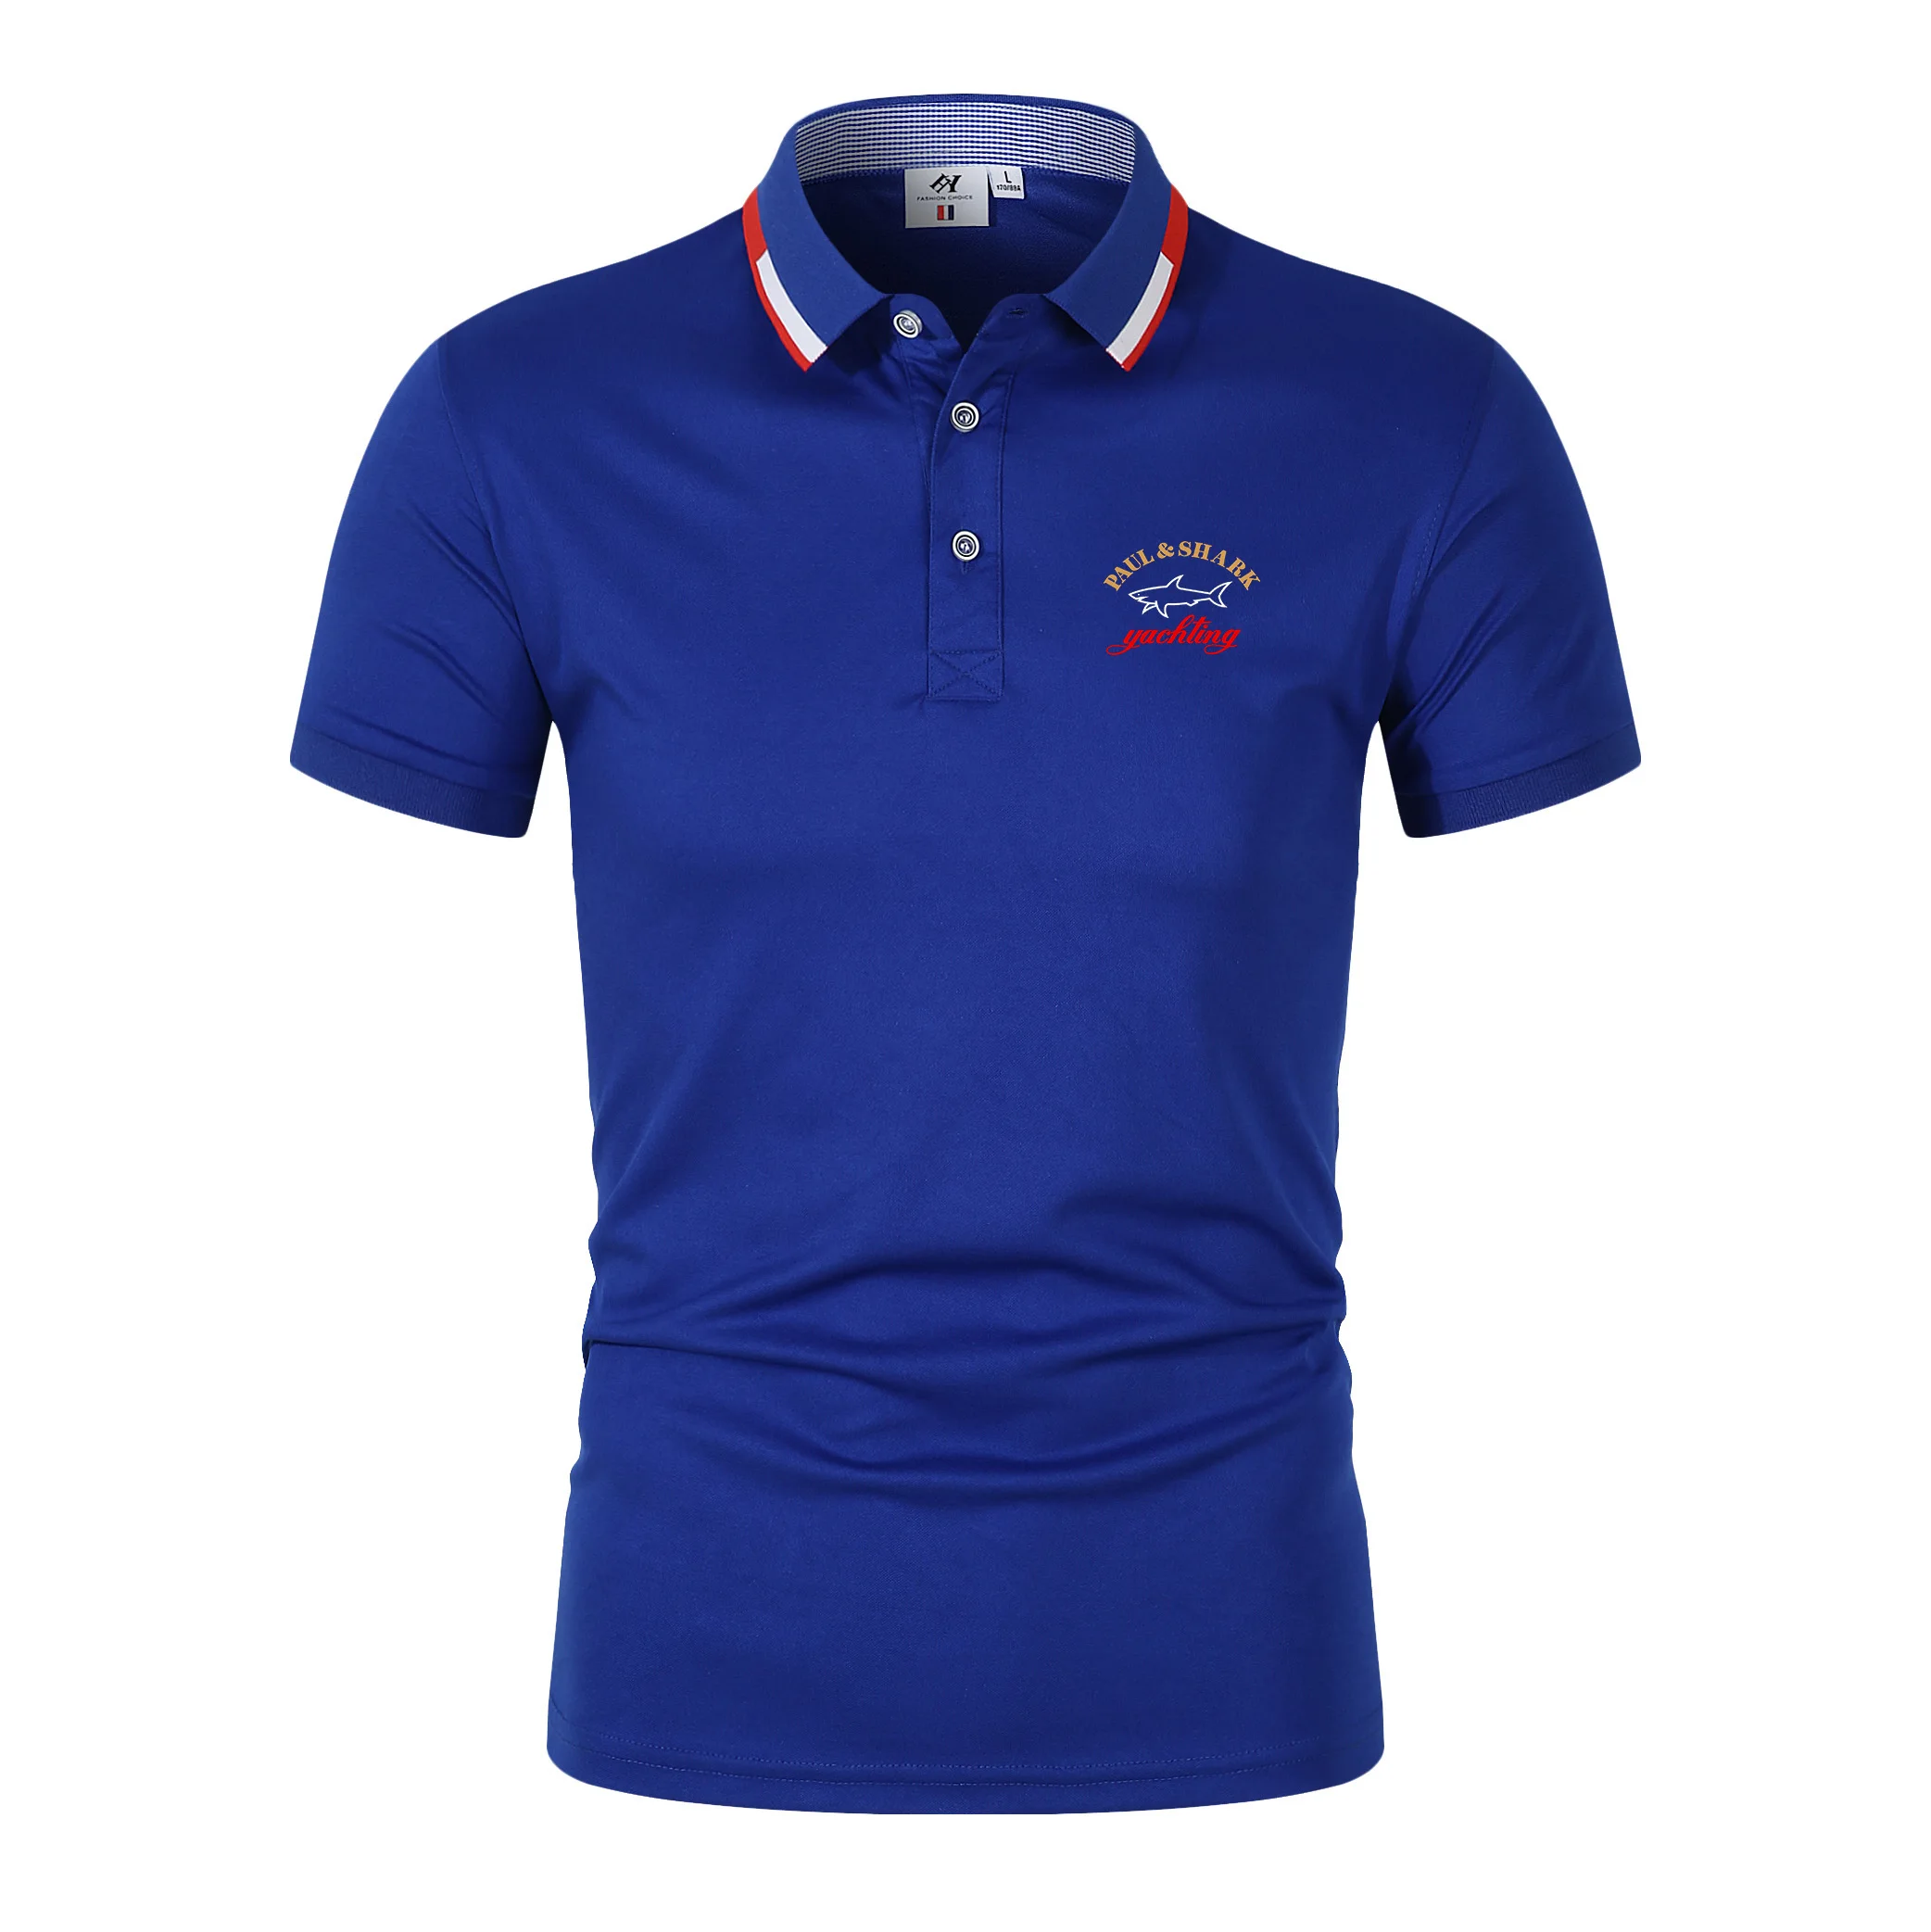 Paul&Shark New Summer Casual Polo Shirt Men's Short Sleeve Business Shirt Fashion Design Top T-shirt Dress Men's Polo Shirt